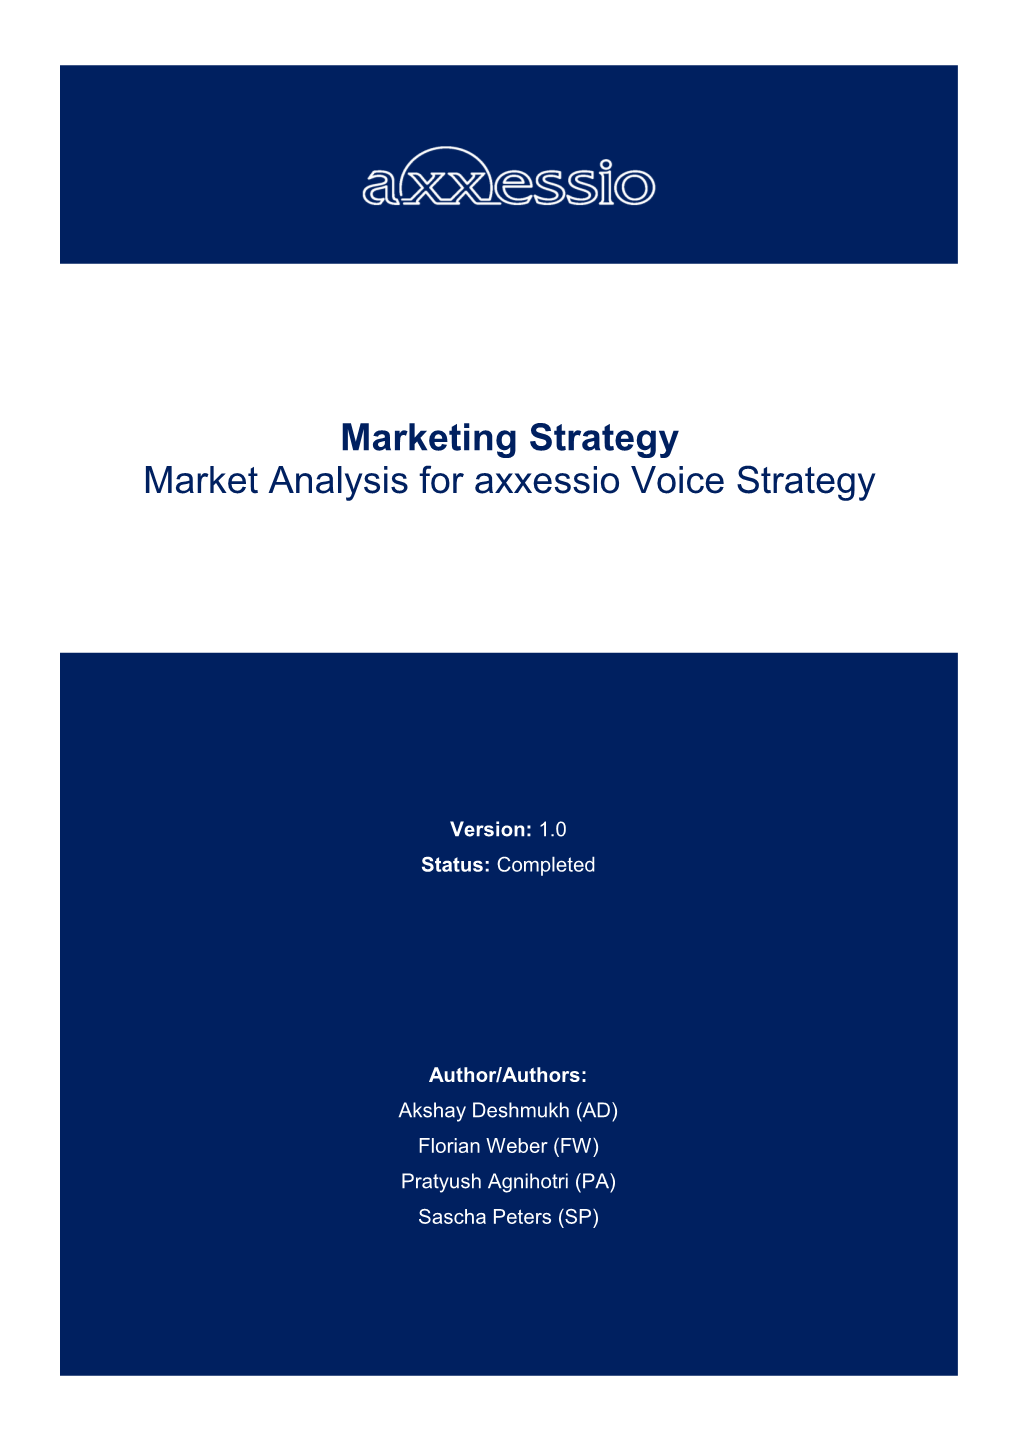 Marketing Strategy Market Analysis for Axxessio Voice Strategy